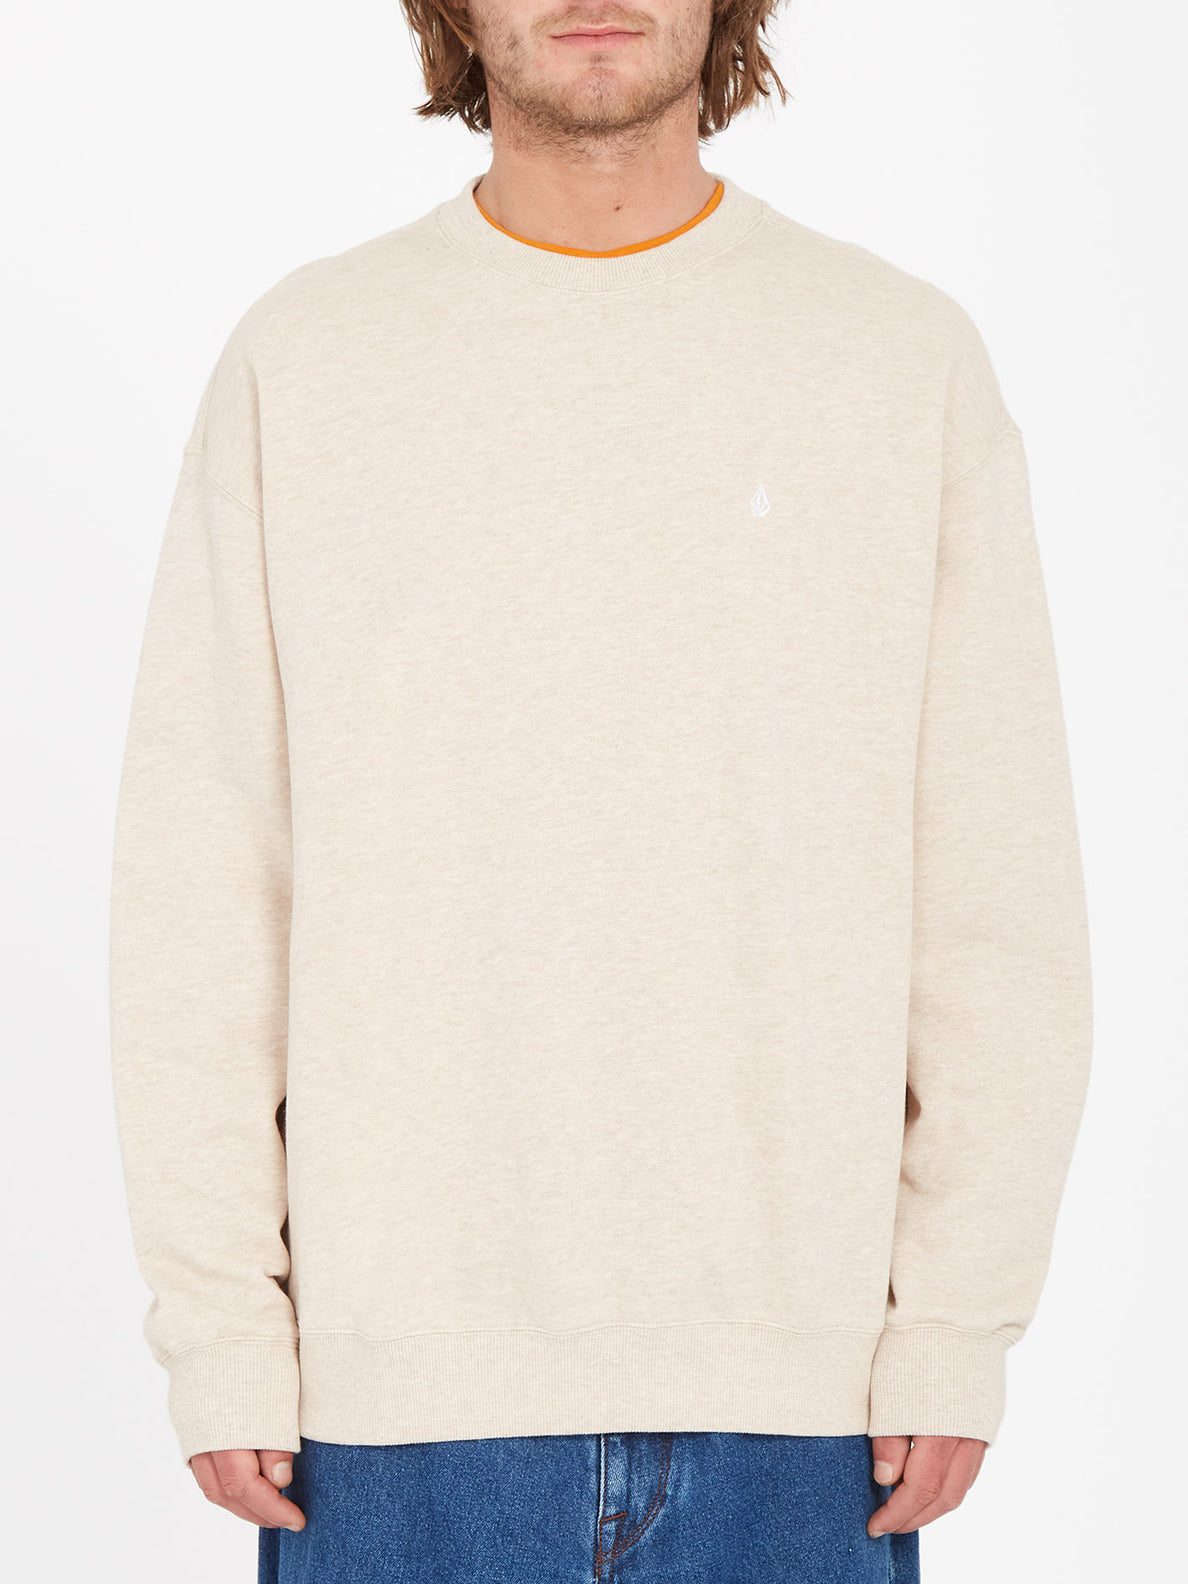 Single Stone Sweatshirt - WHITECAP GREY (A4632213_WCG) [F]